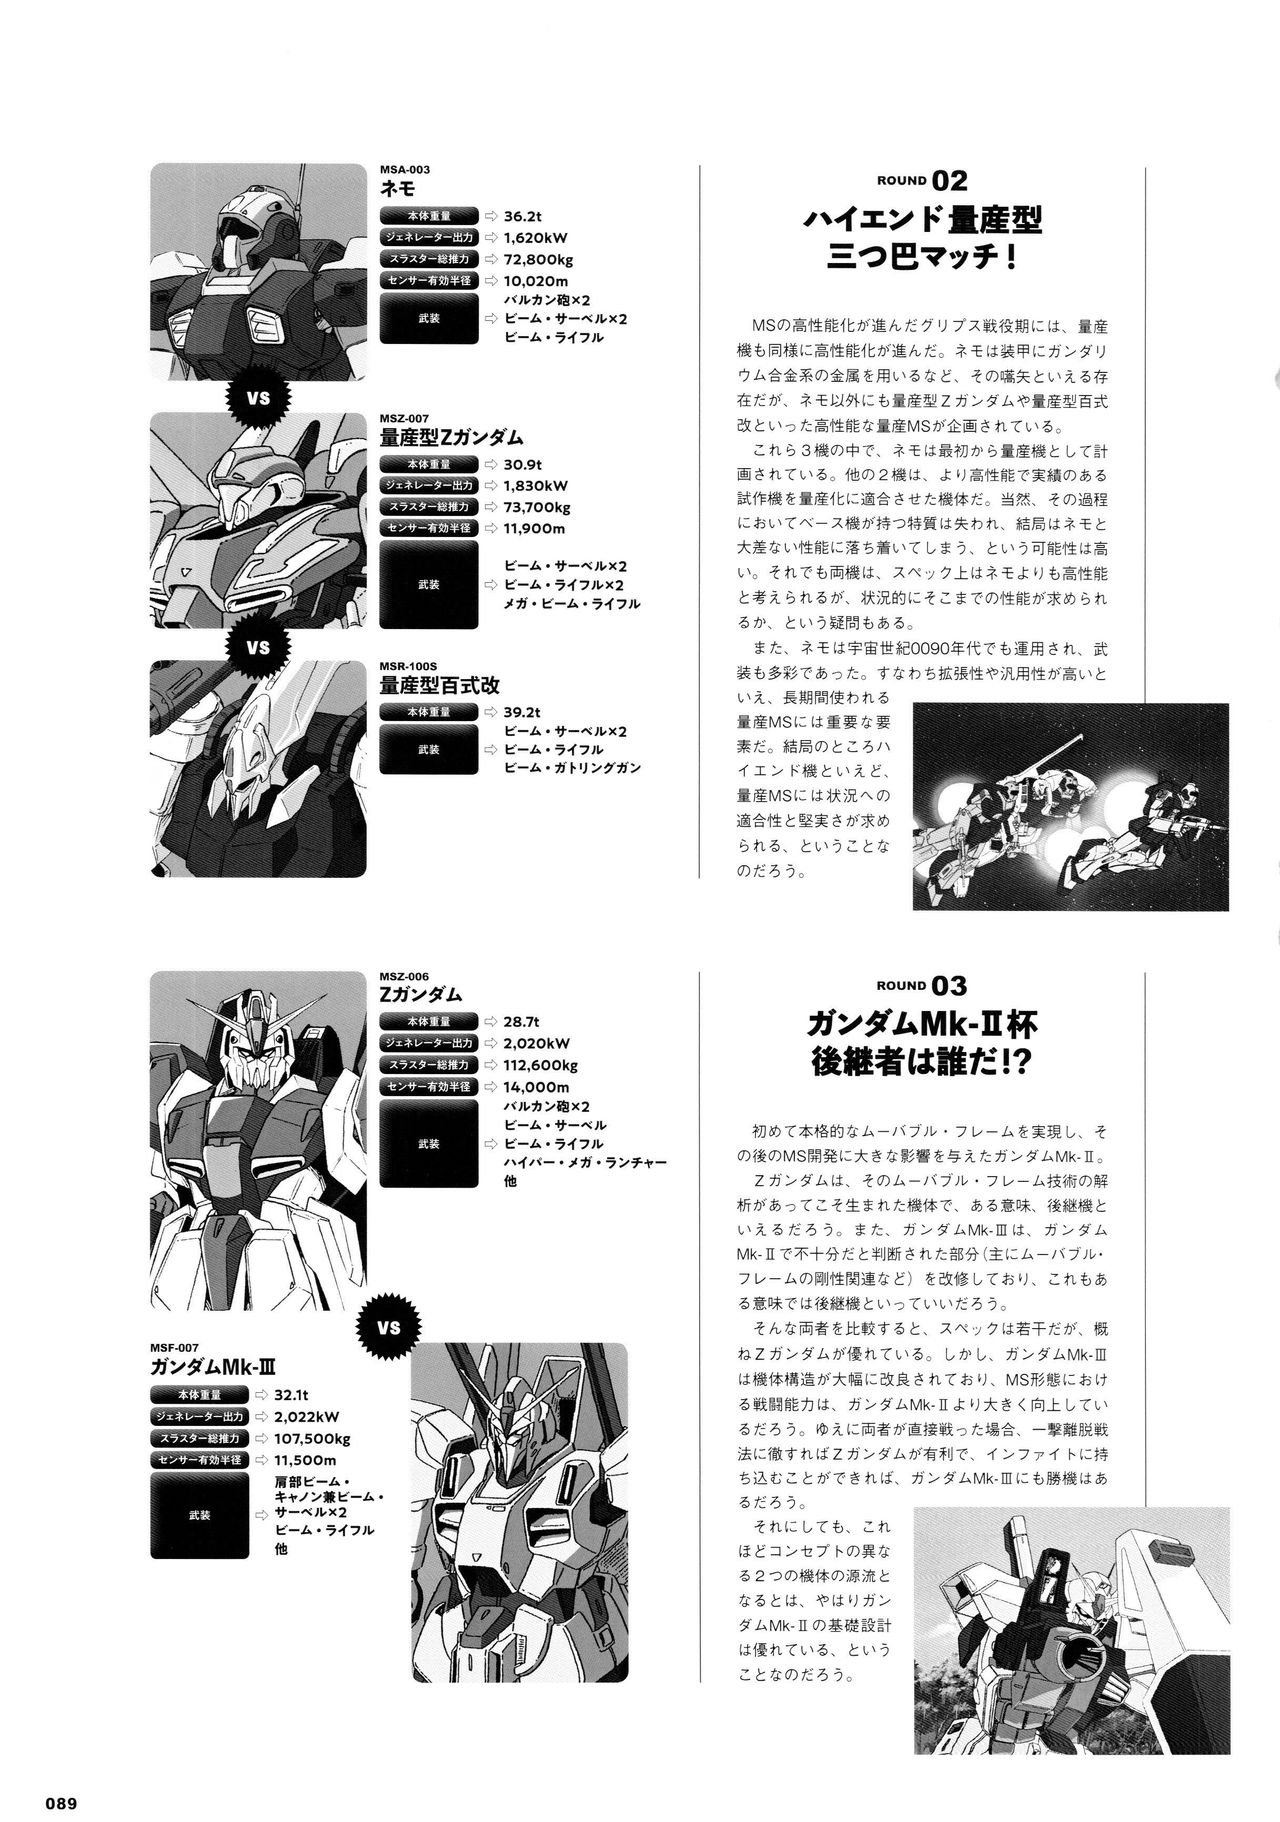 Mobile Suit Gundam - MSV The Second - Generation 1986-1993 88